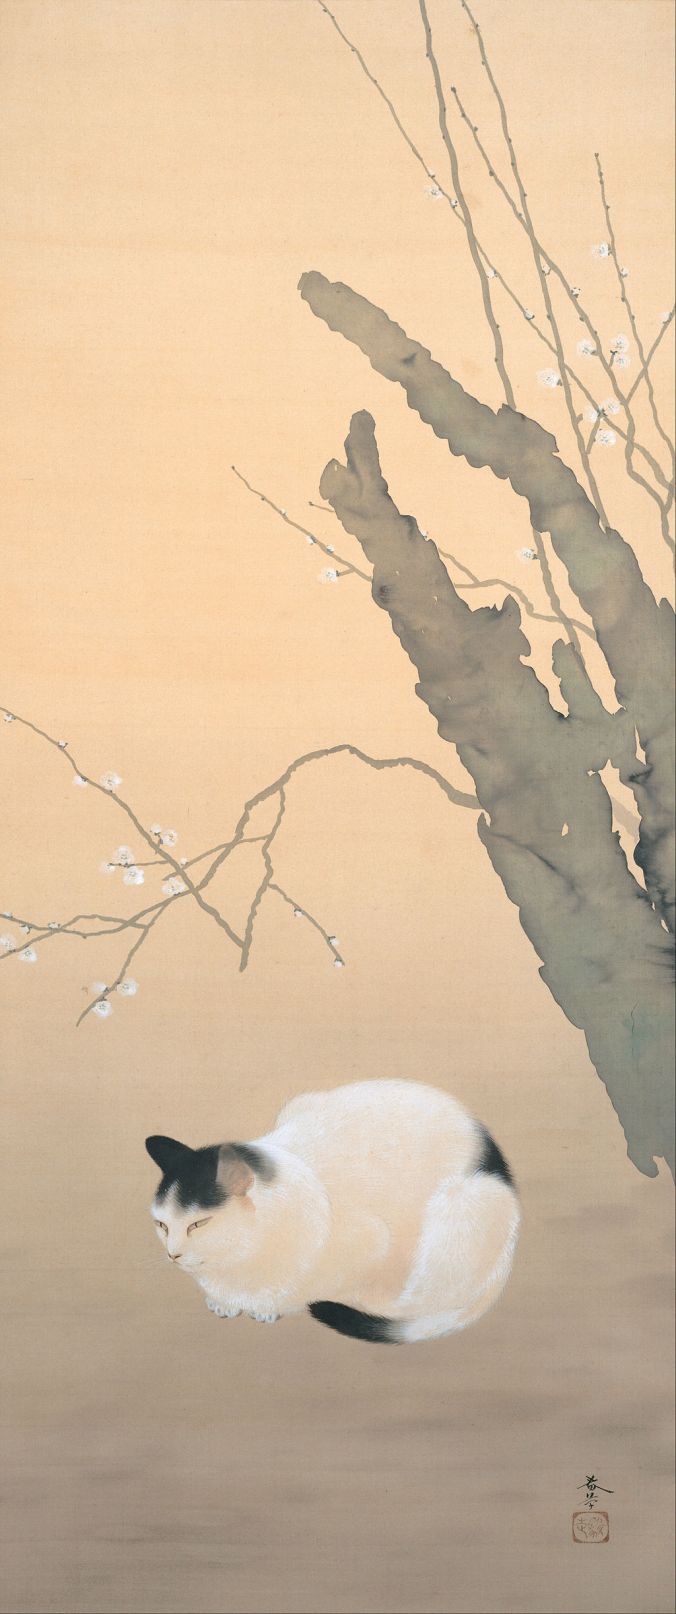 By Hishida shunso (1874 - 1911) (Japanese) (Painter, Details of artist on Google Art Project) [Public domain or Public domain], via Wikimedia Commons